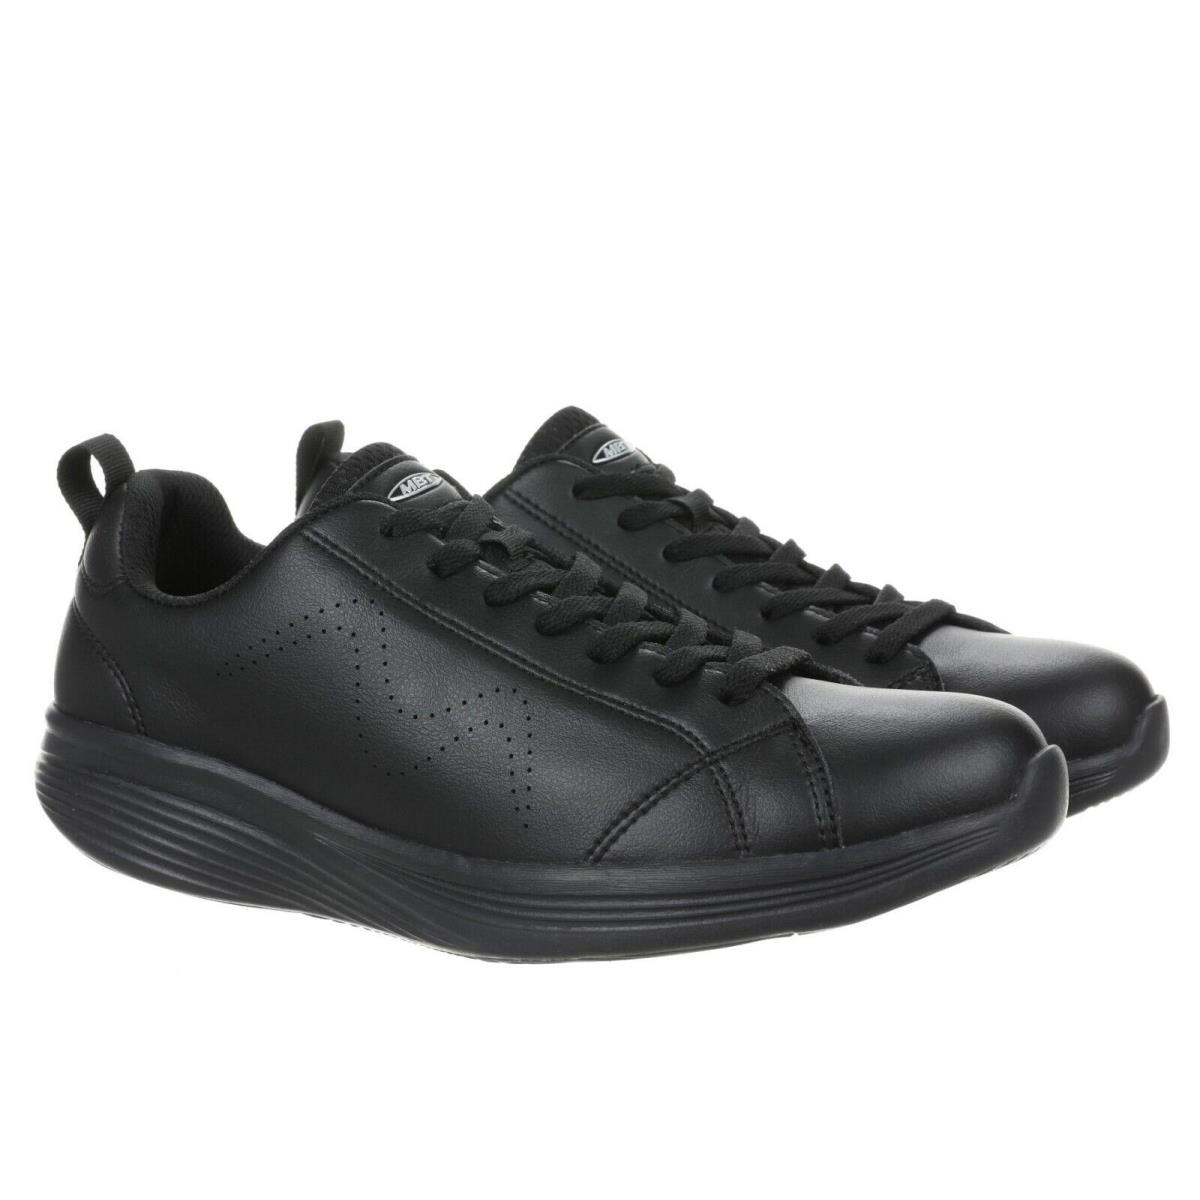 MBT shoes  - Black/Black 4